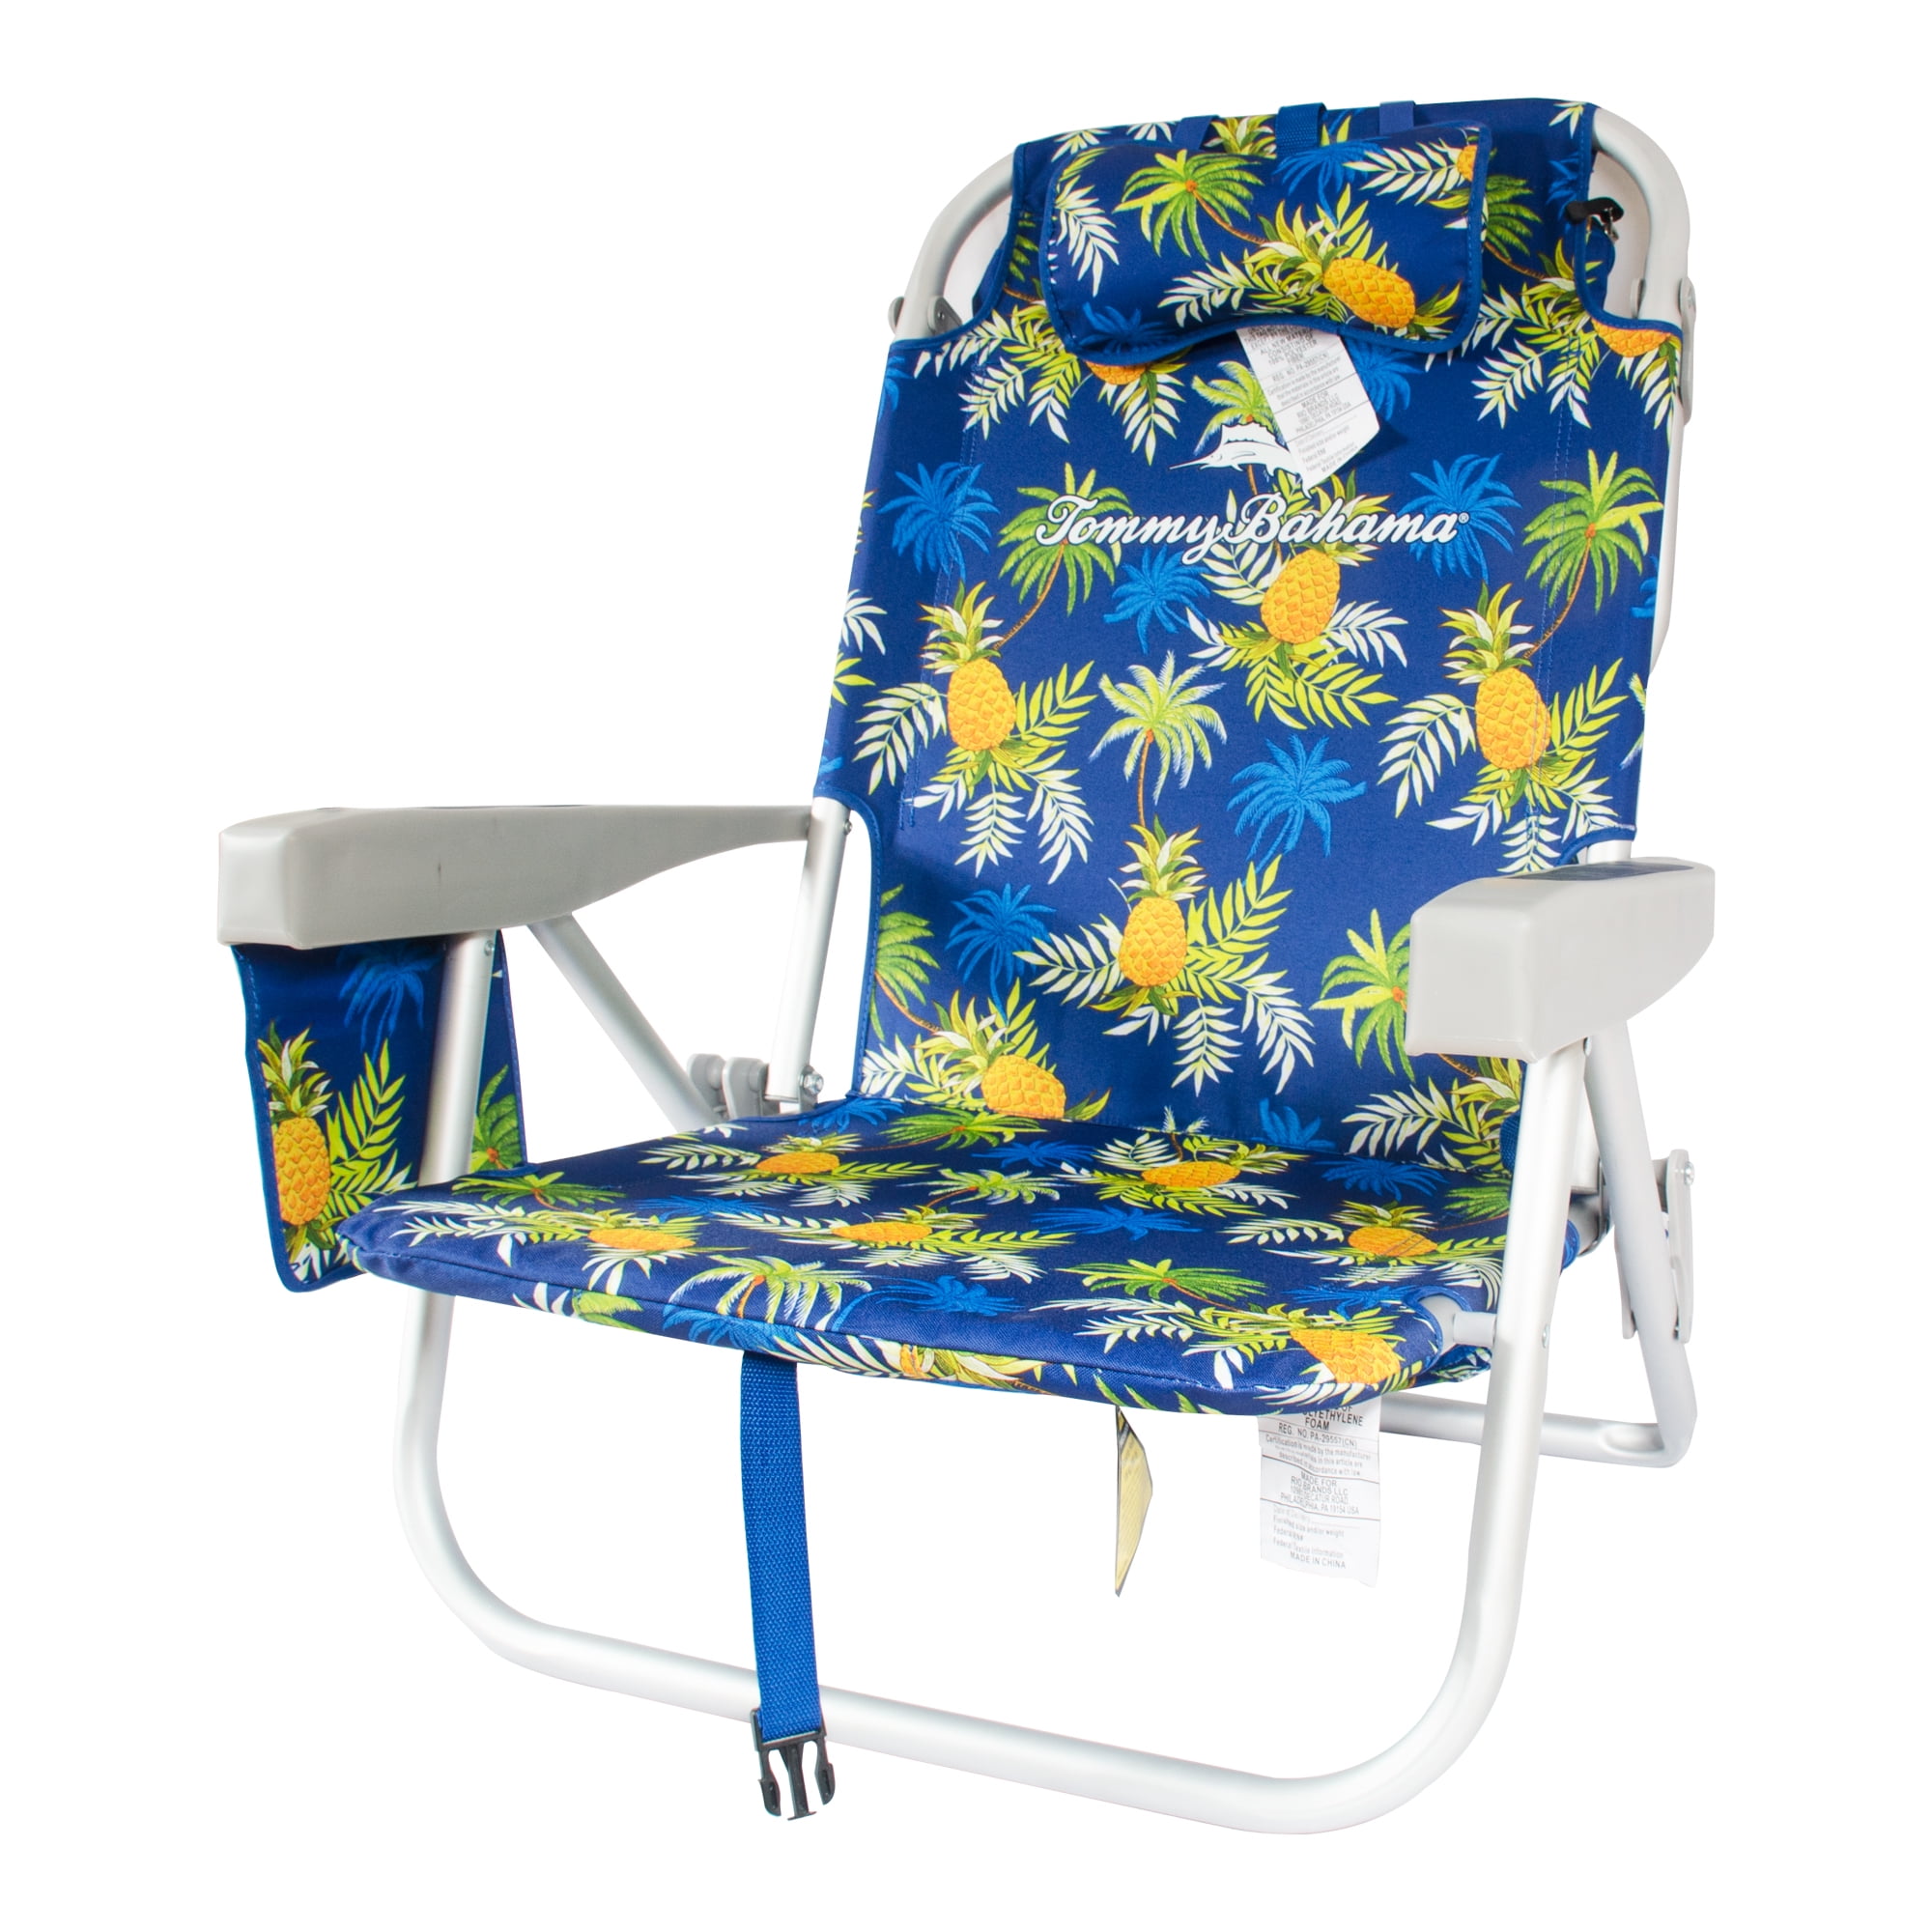 ⛱️⛱Tommy Bahama Backpack Beach Folding Chair Blue Pineapple Green Flower 